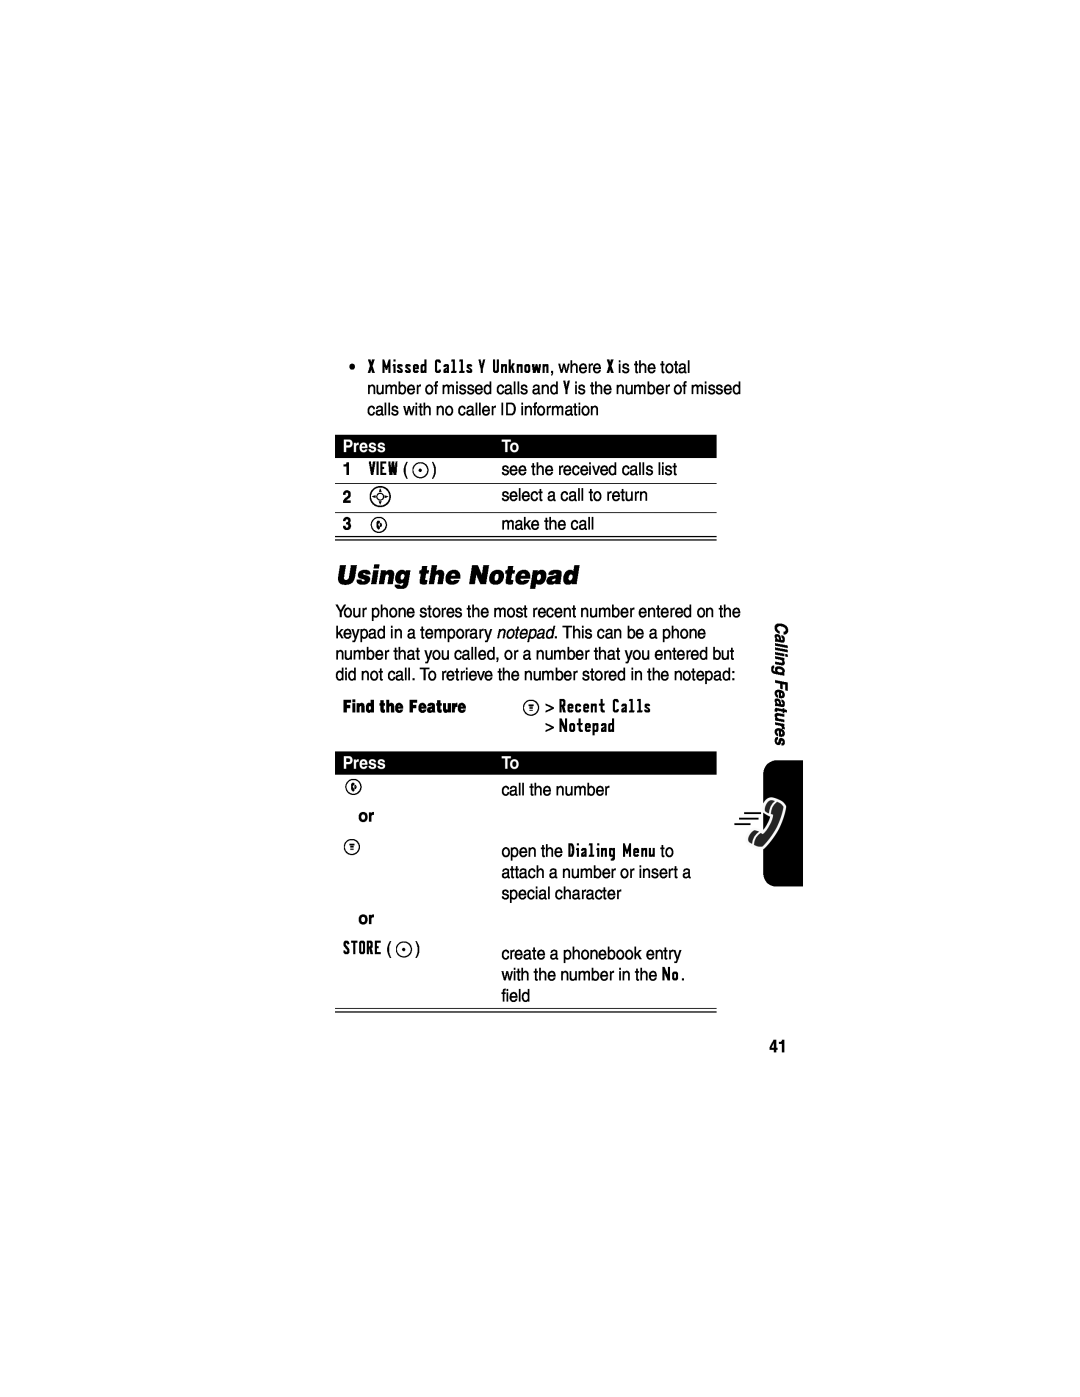 Motorola C341a, CDMA manual Using the Notepad, Press 